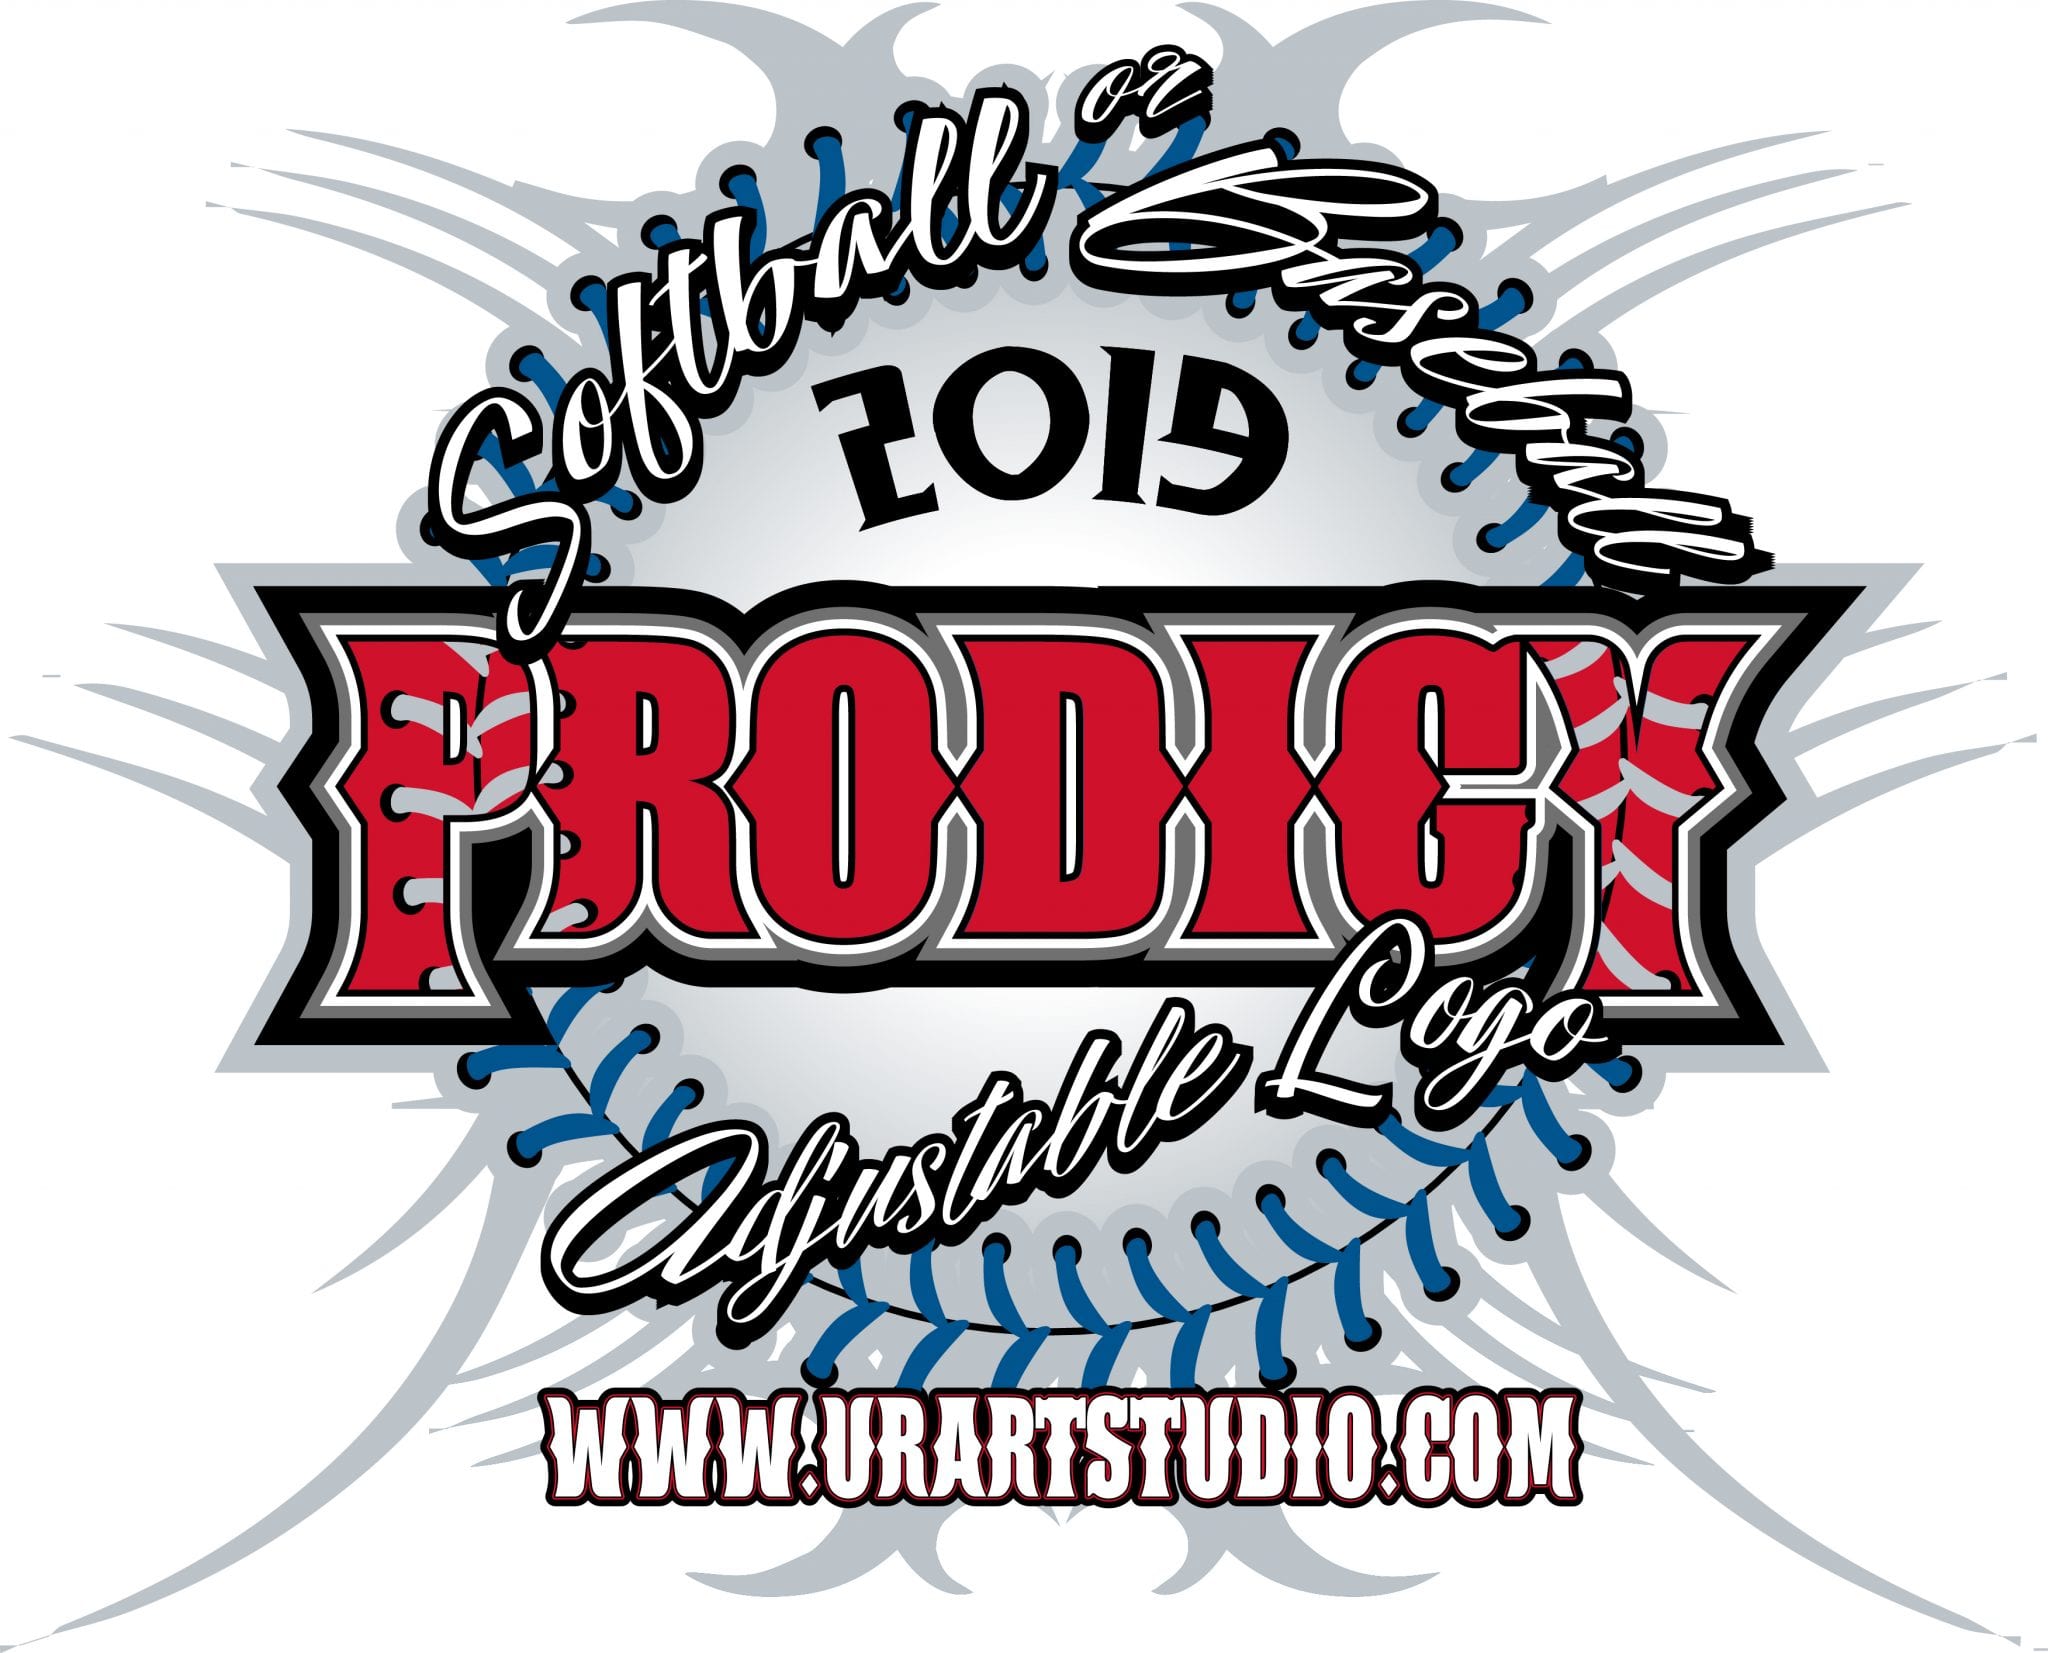 Softball Baseball Prodigy Adjustable Logo 2019 T Shirt Vector Logo